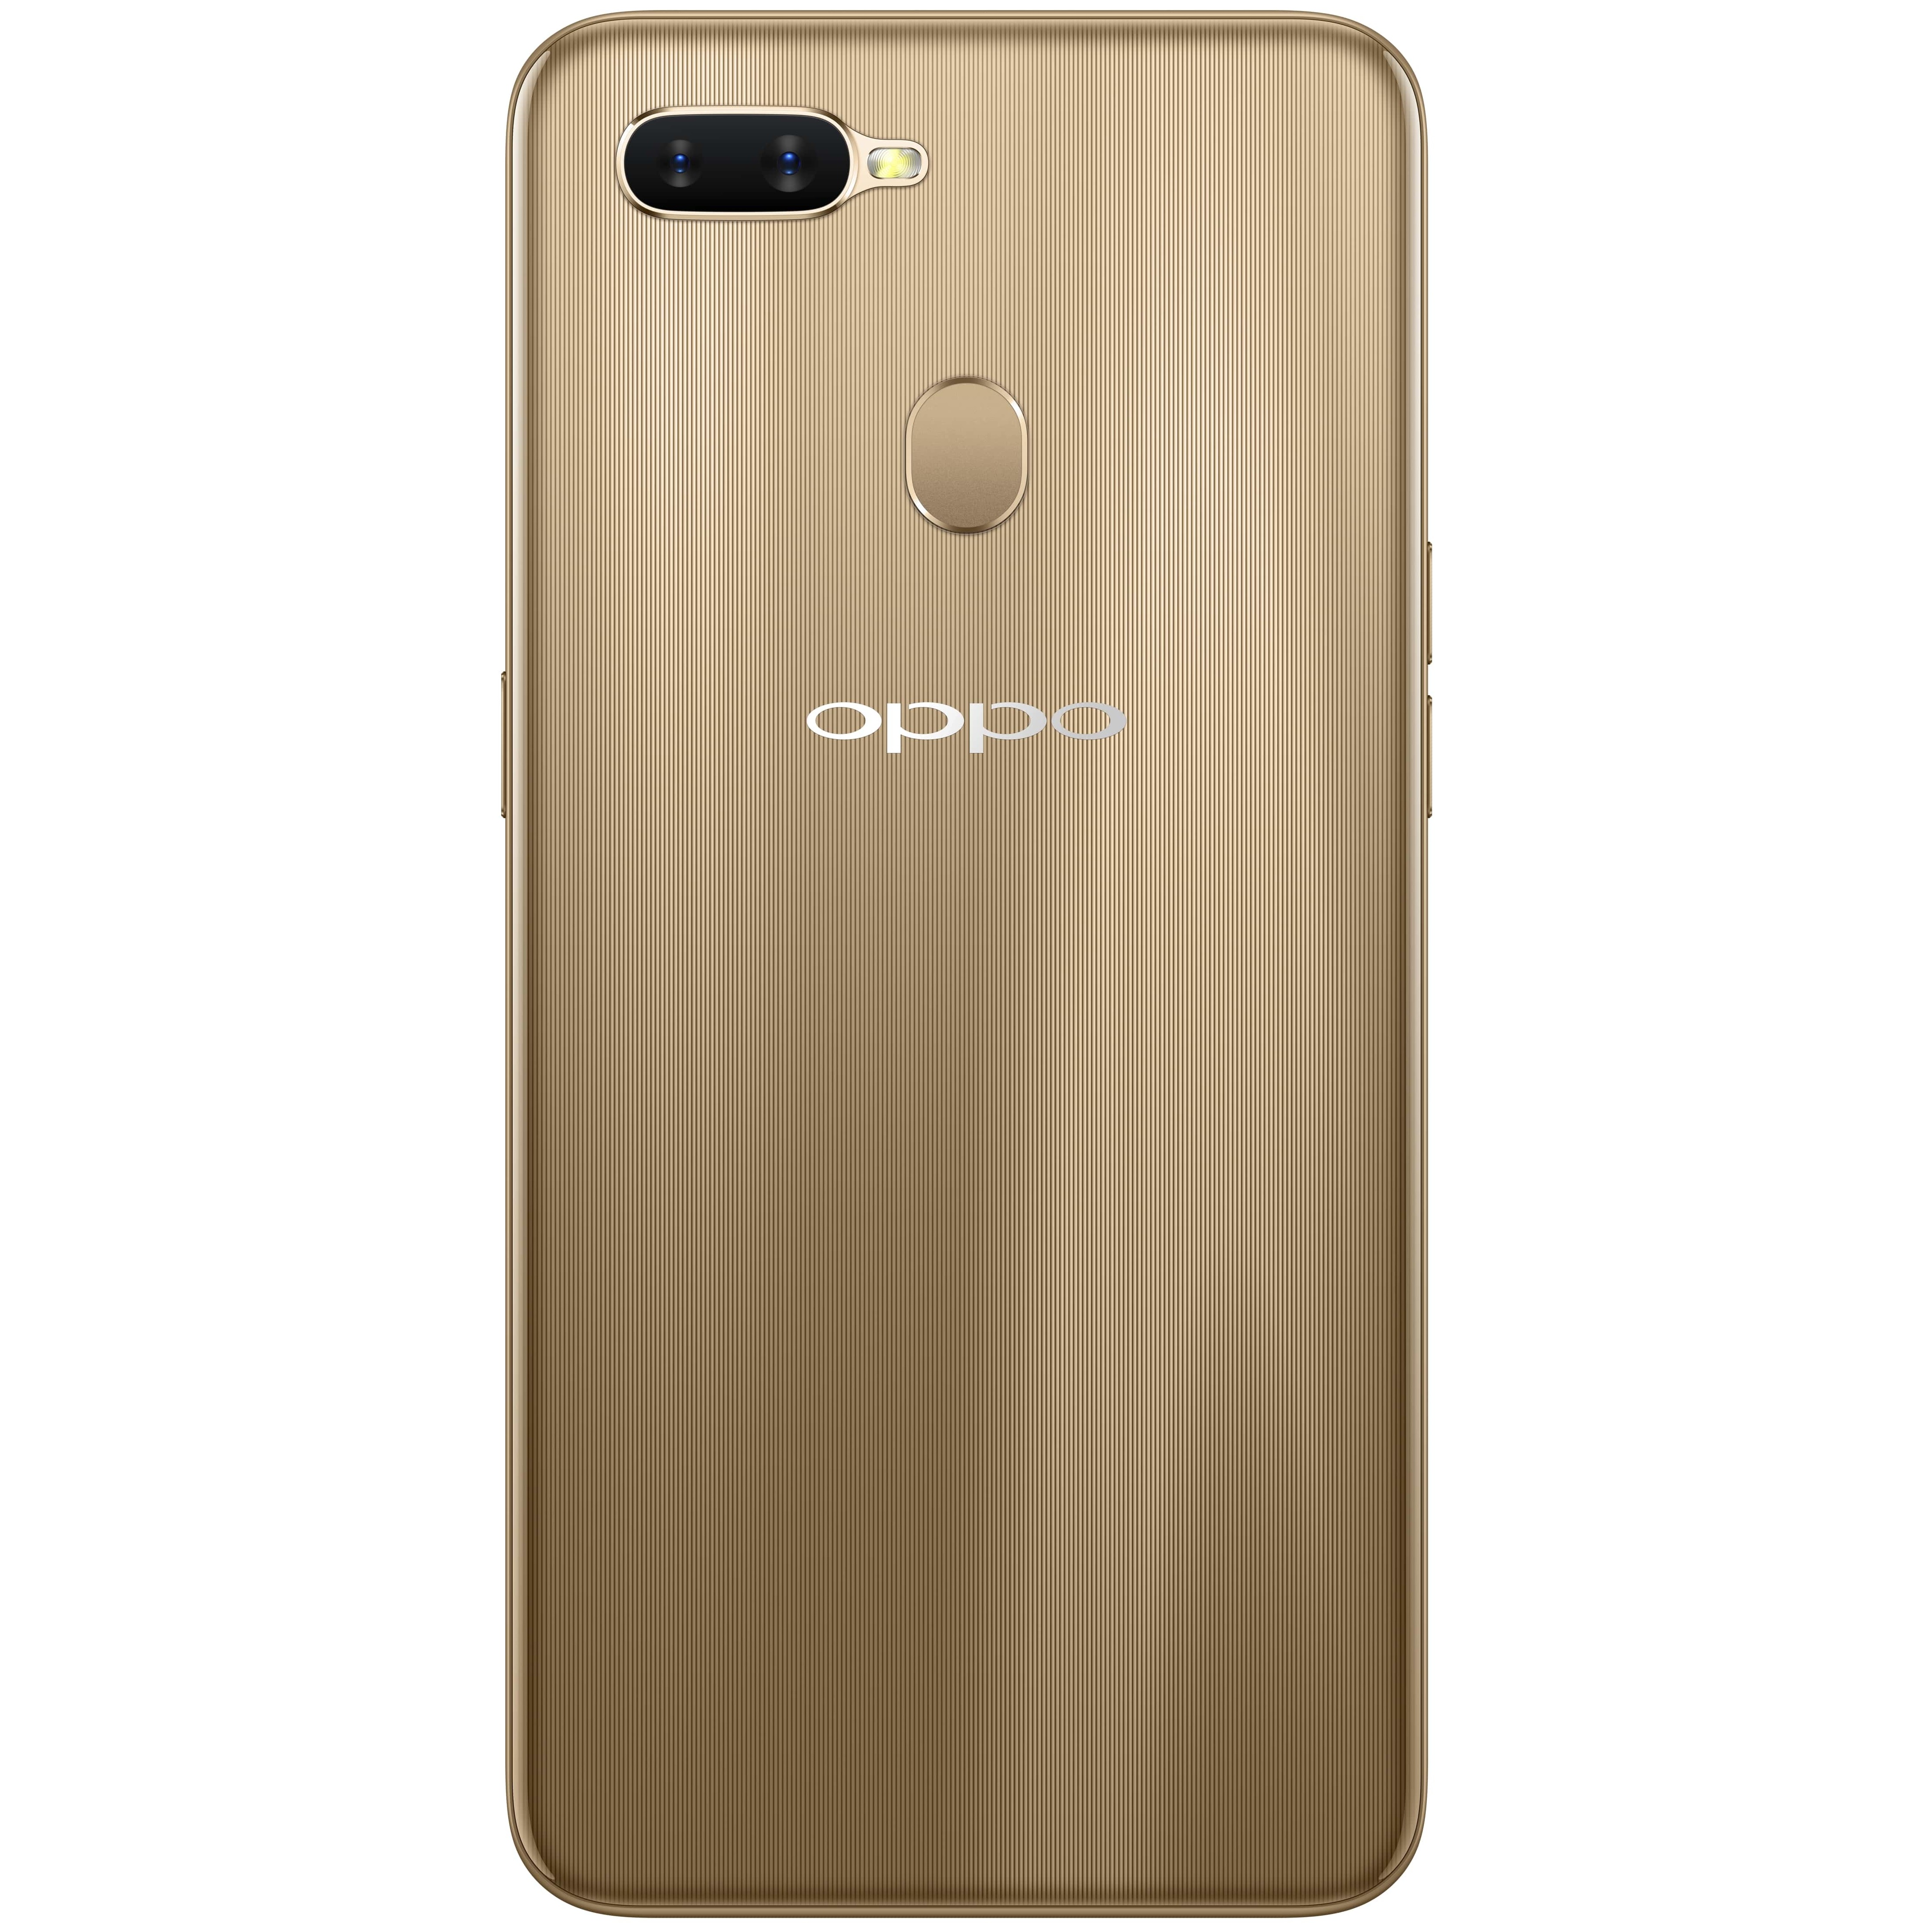 Орро x7. Oppo ax7. Смартфон Oppo a5s. Телефон Oppo ax7. Oppo ax7 3/64gb.